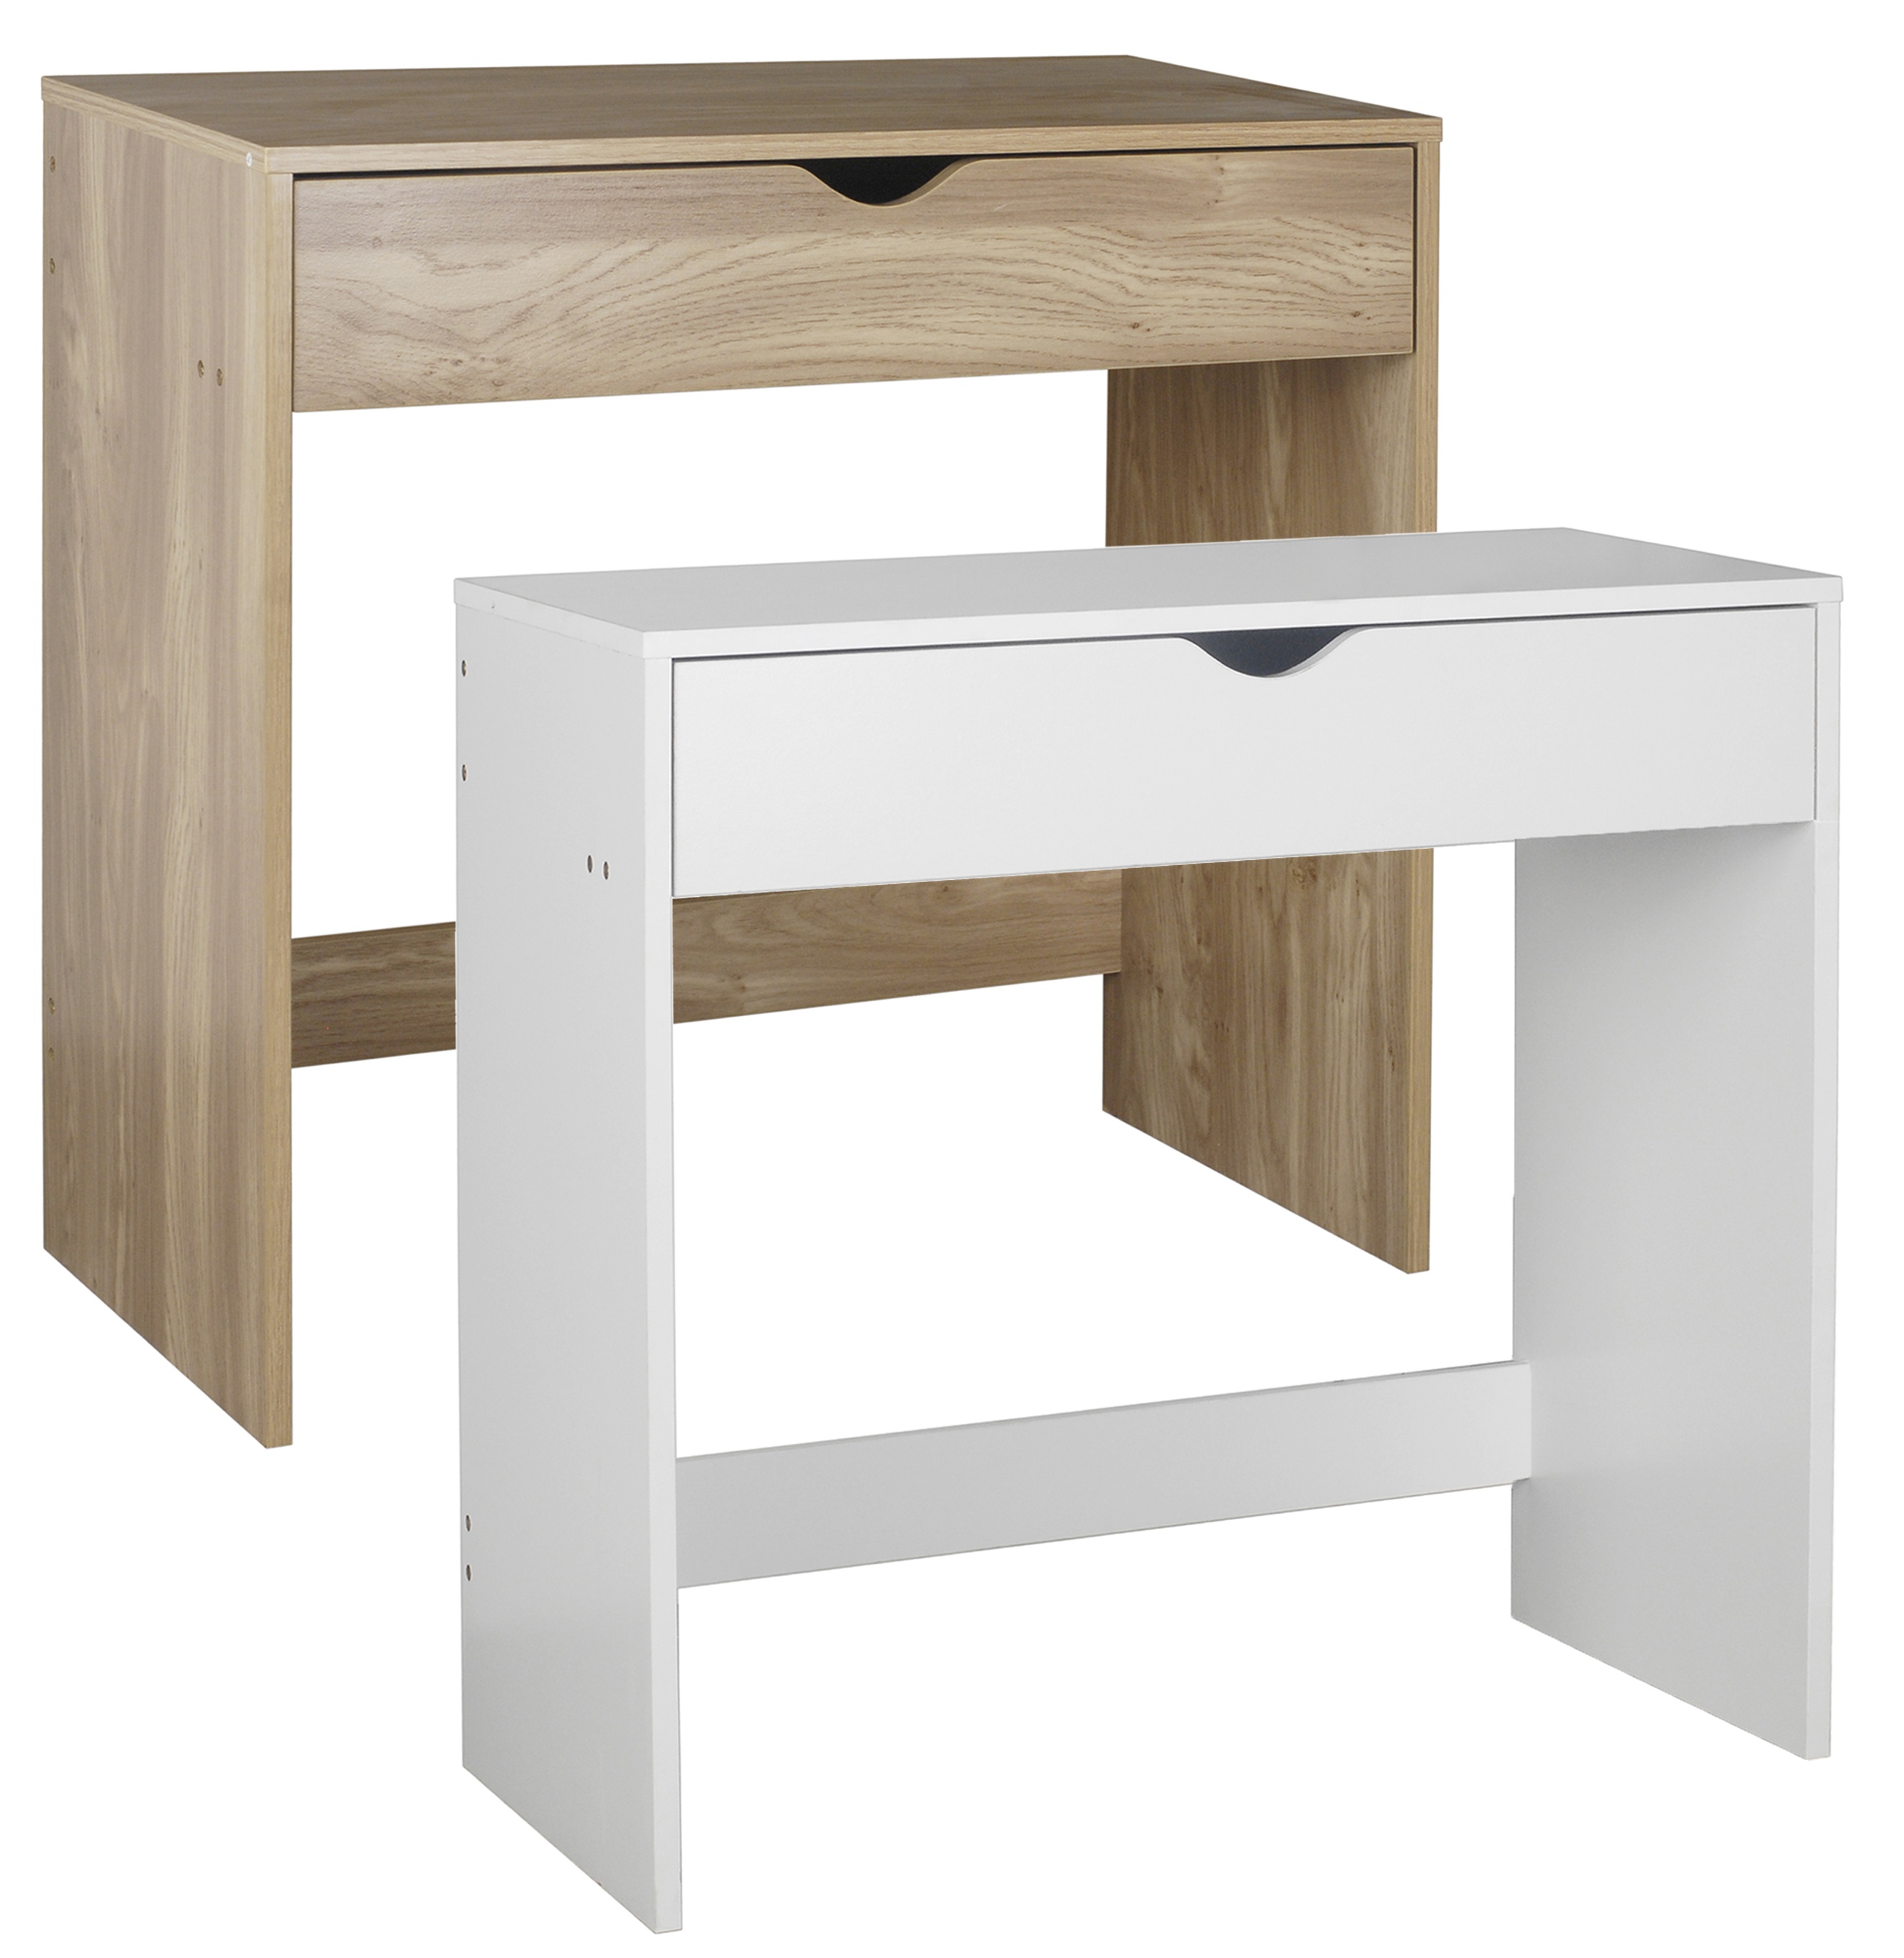 1 Small Drawer Dressing Table Wooden Vanity Desk Bedroom Furniture